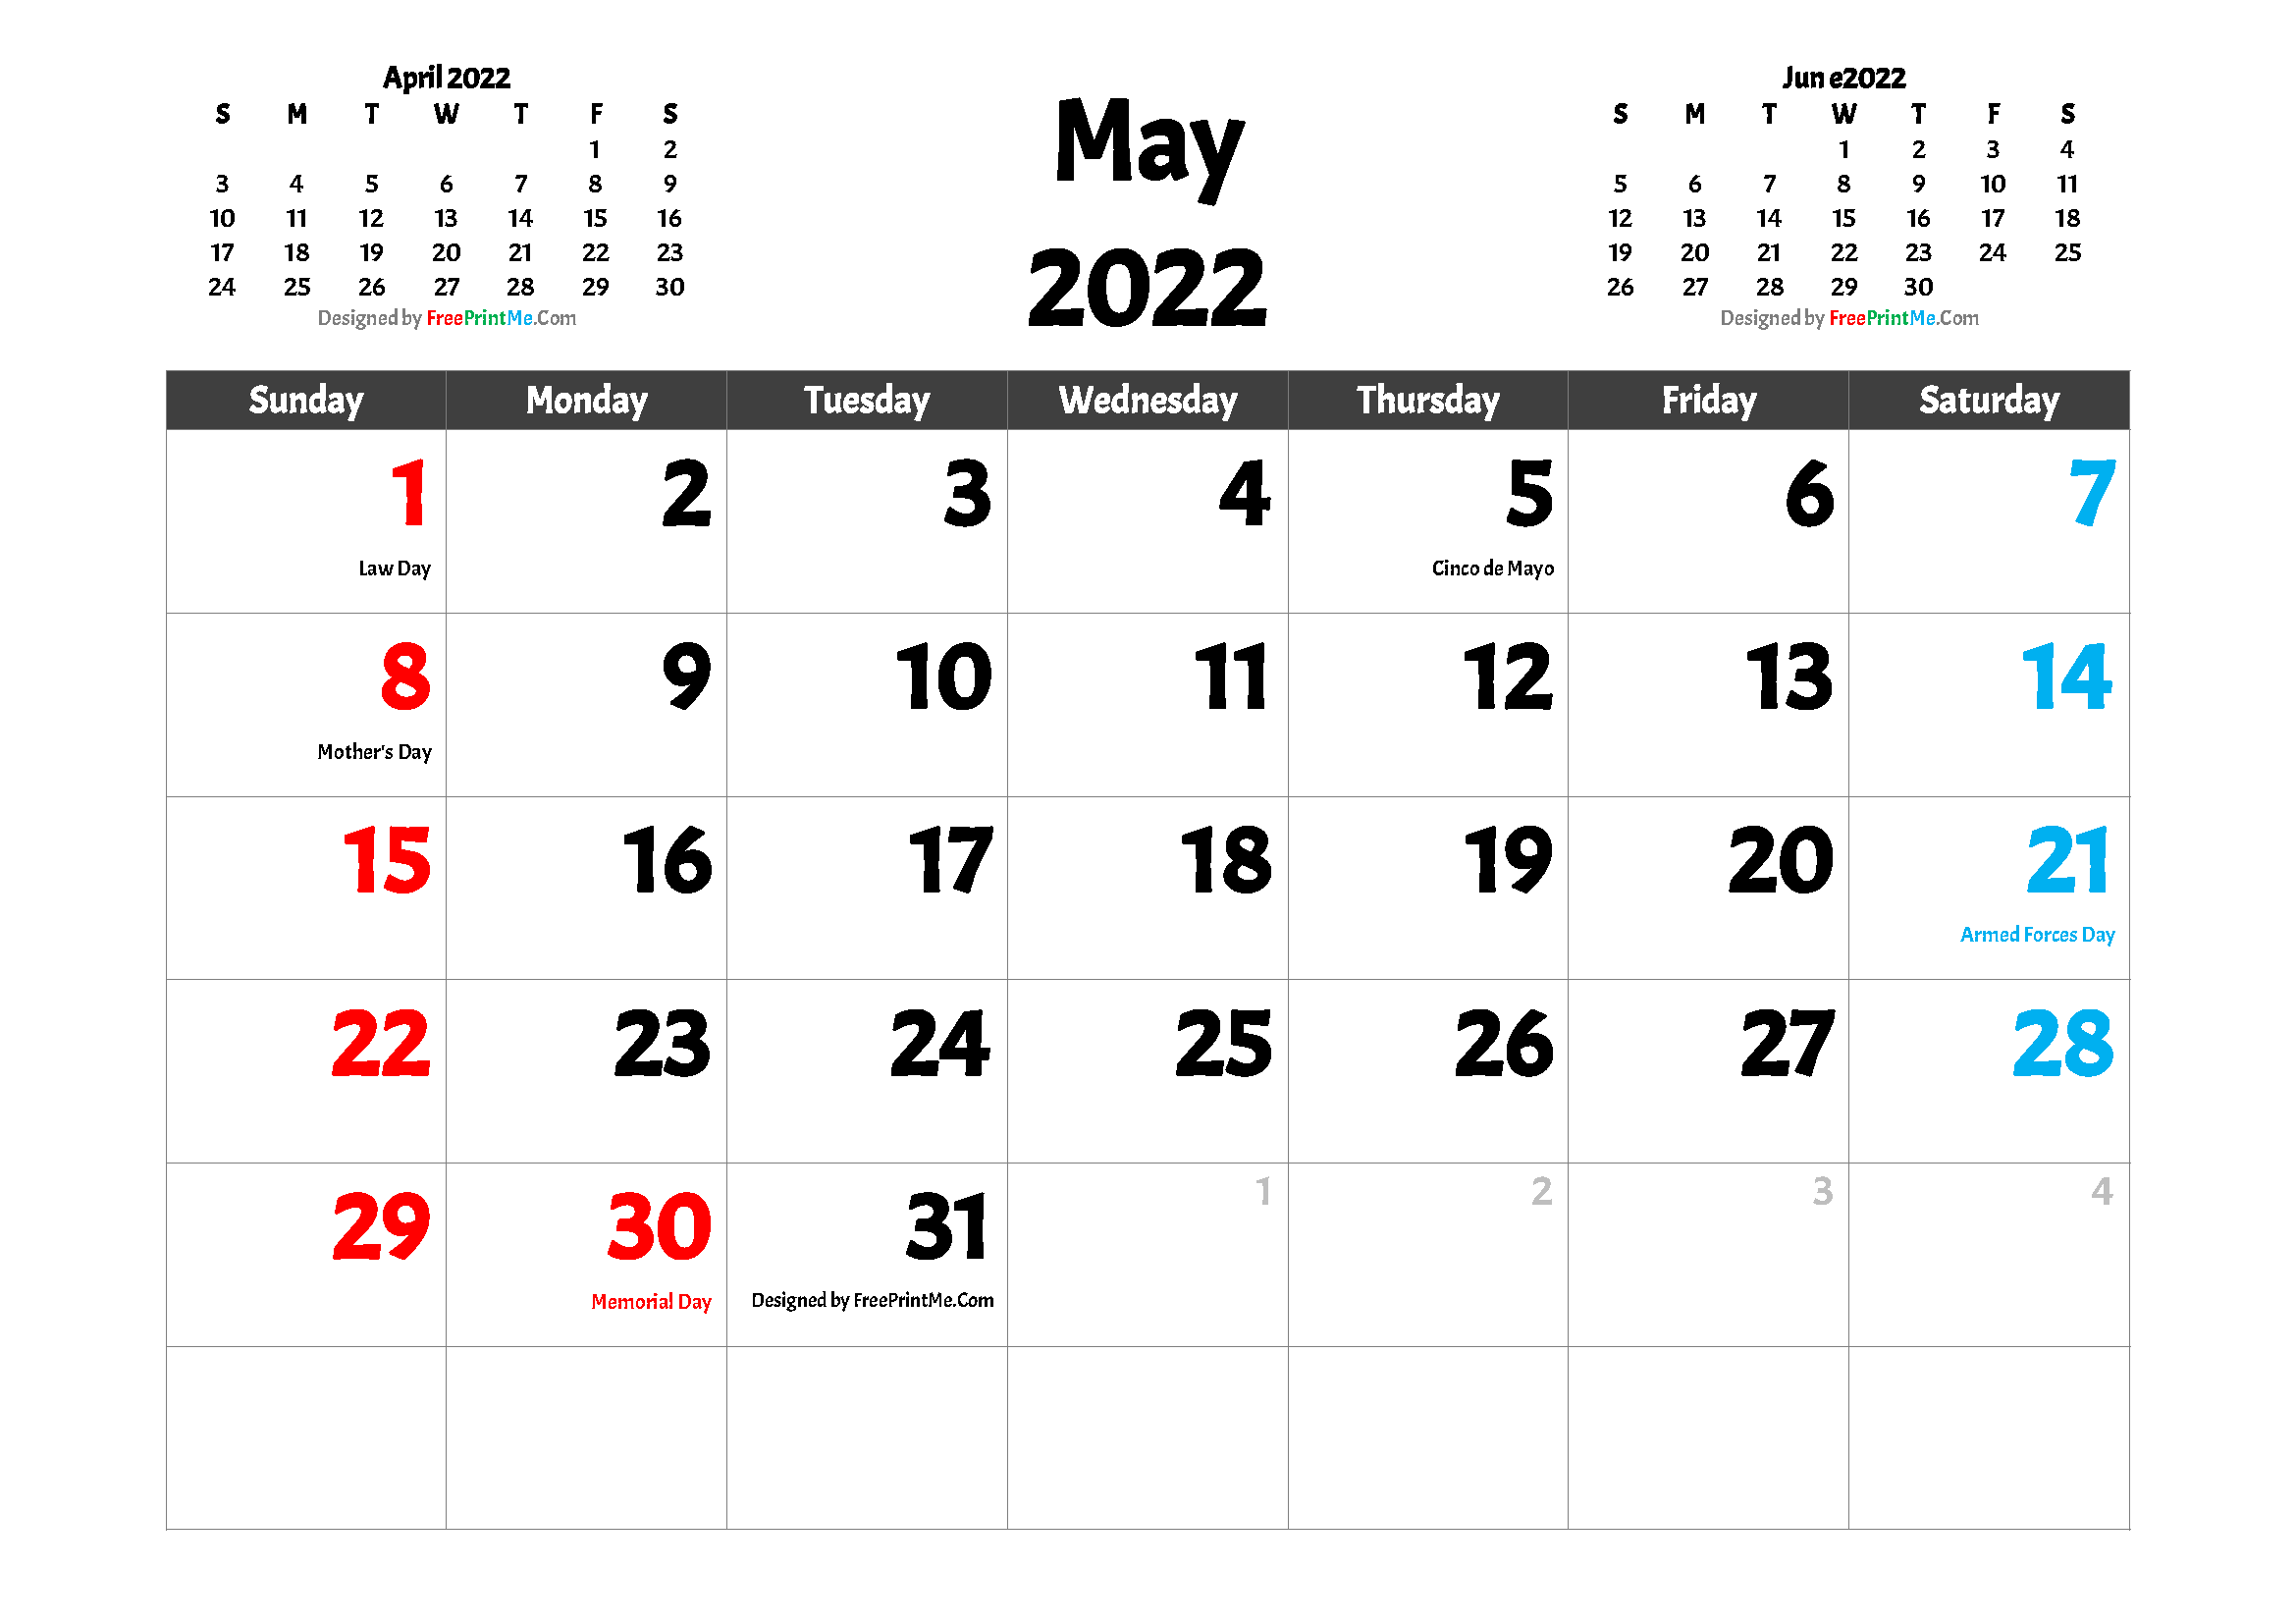 May 2022 Calendar Holidays Free Printable May 2022 Calendar With Holidays - Freeprintme.com